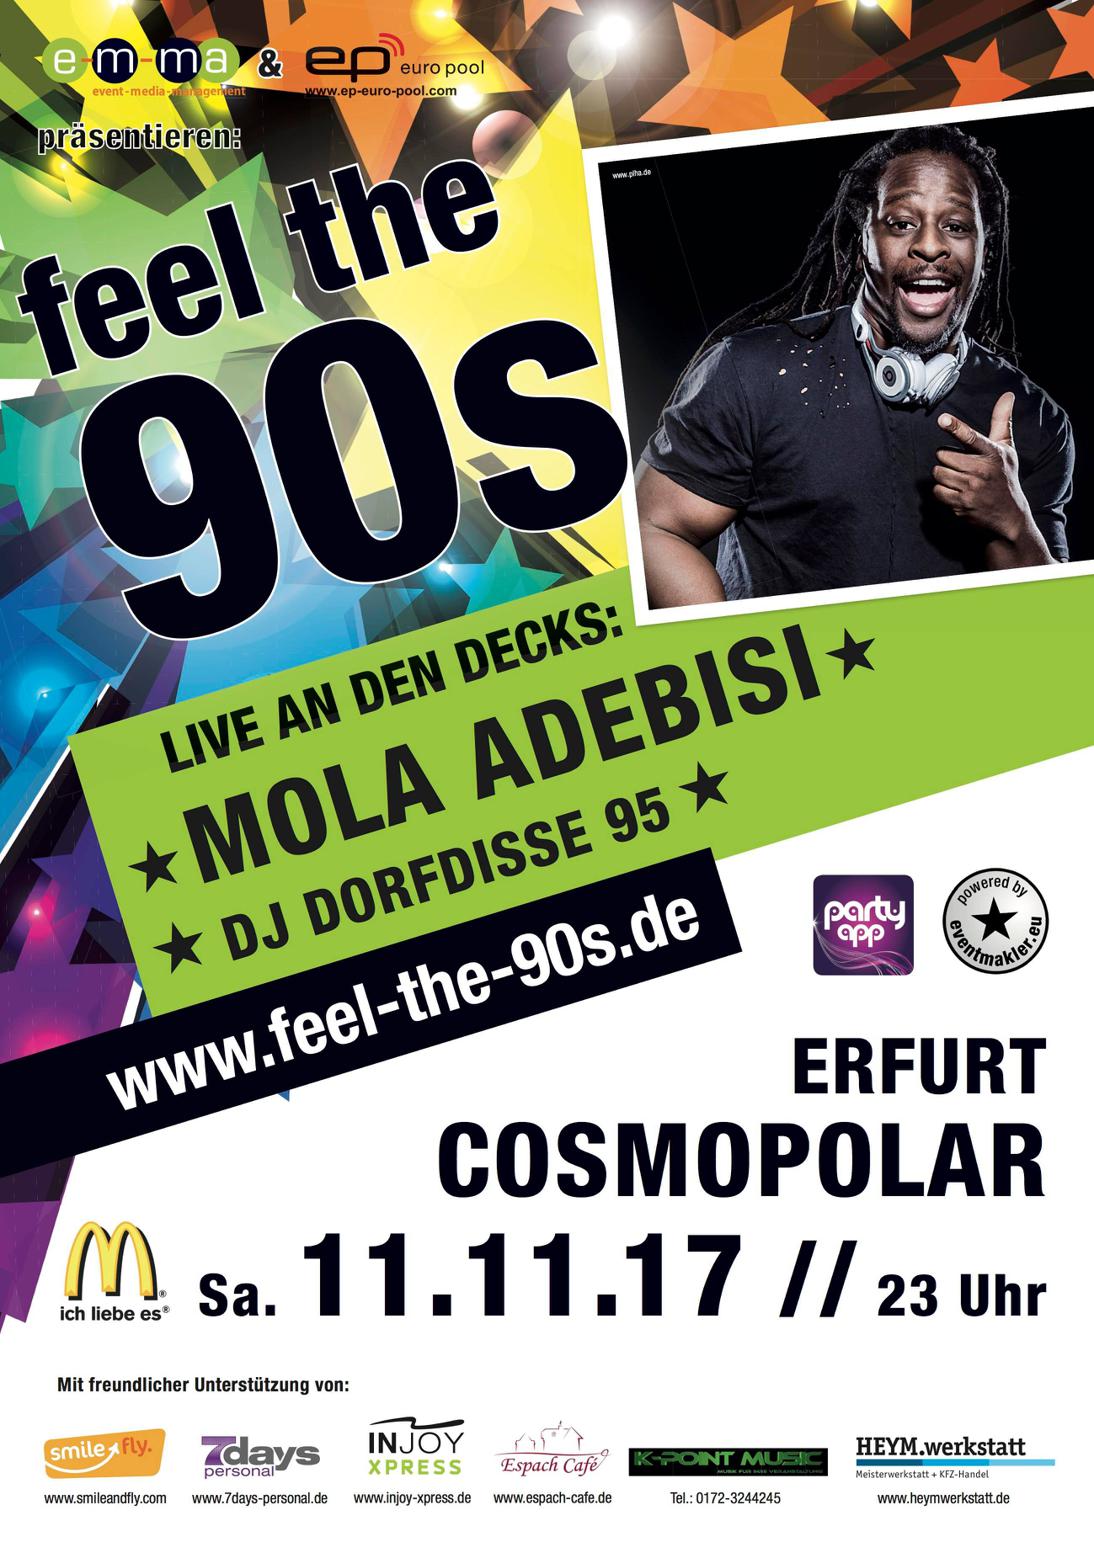 ★ Feel the 90s Erfurt ★ mit MOLA Adebisi & DJ Dorfdisse95